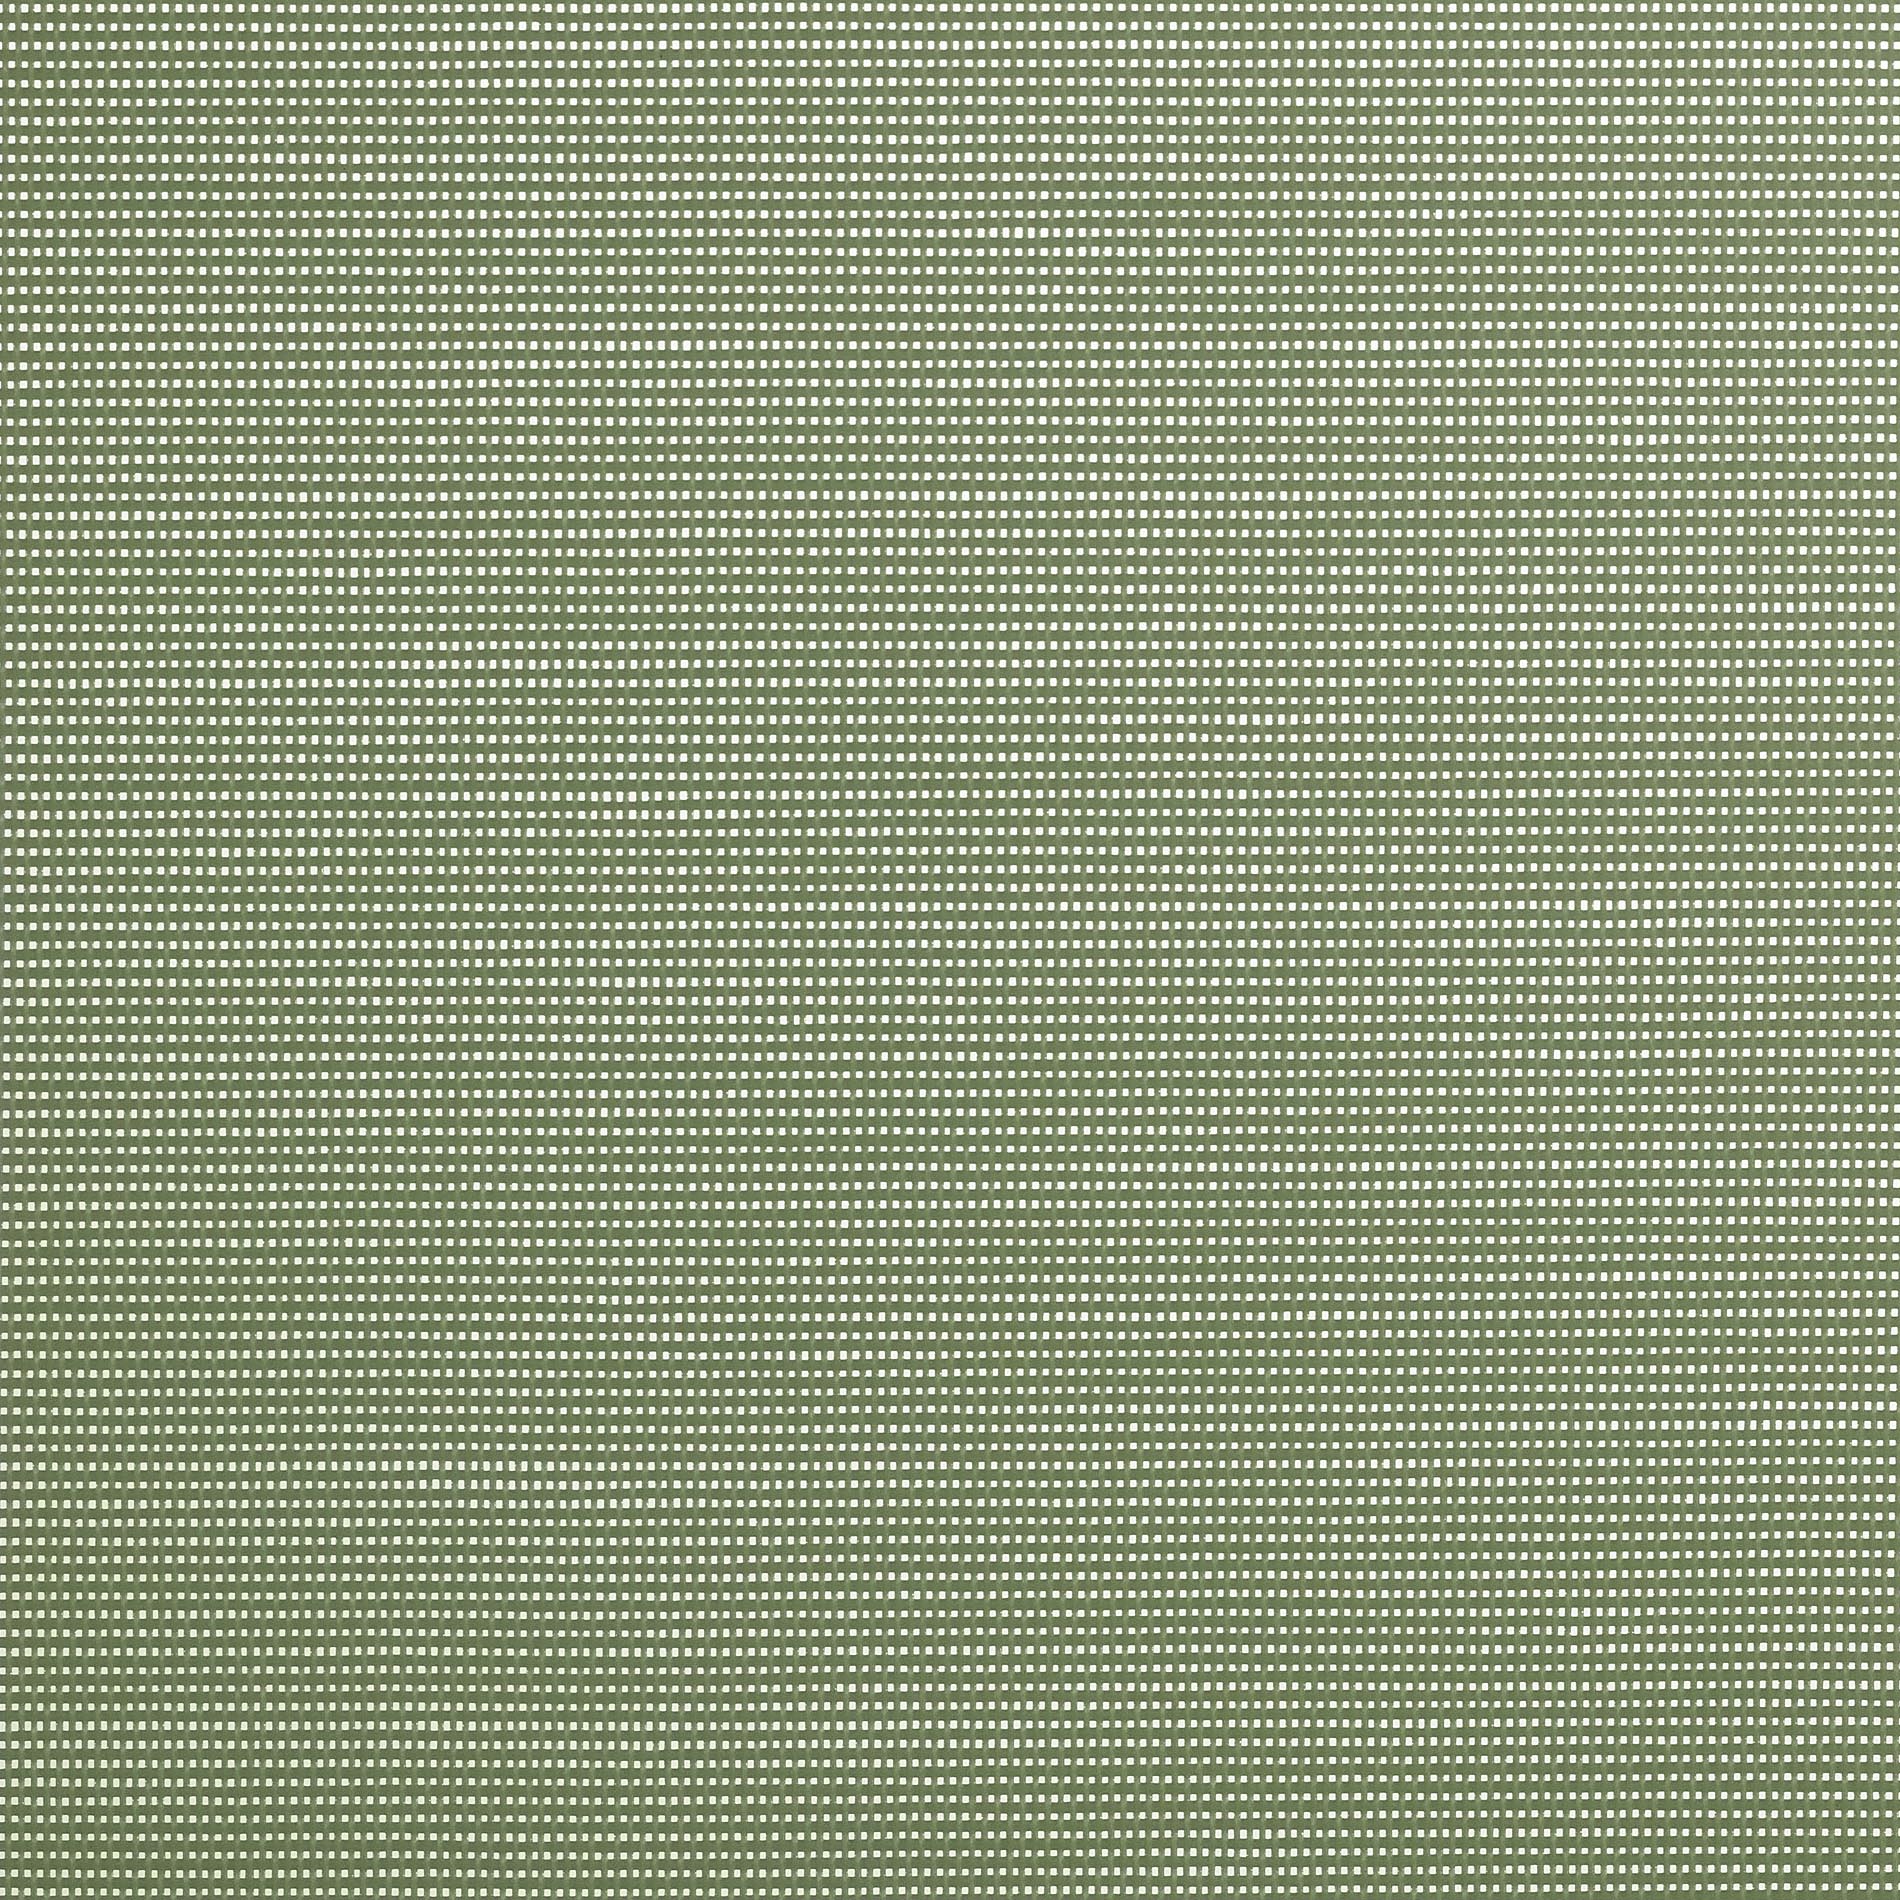 Altex - Fabric - SOLTIS HORIZON 86 - Moss green - 86-2158